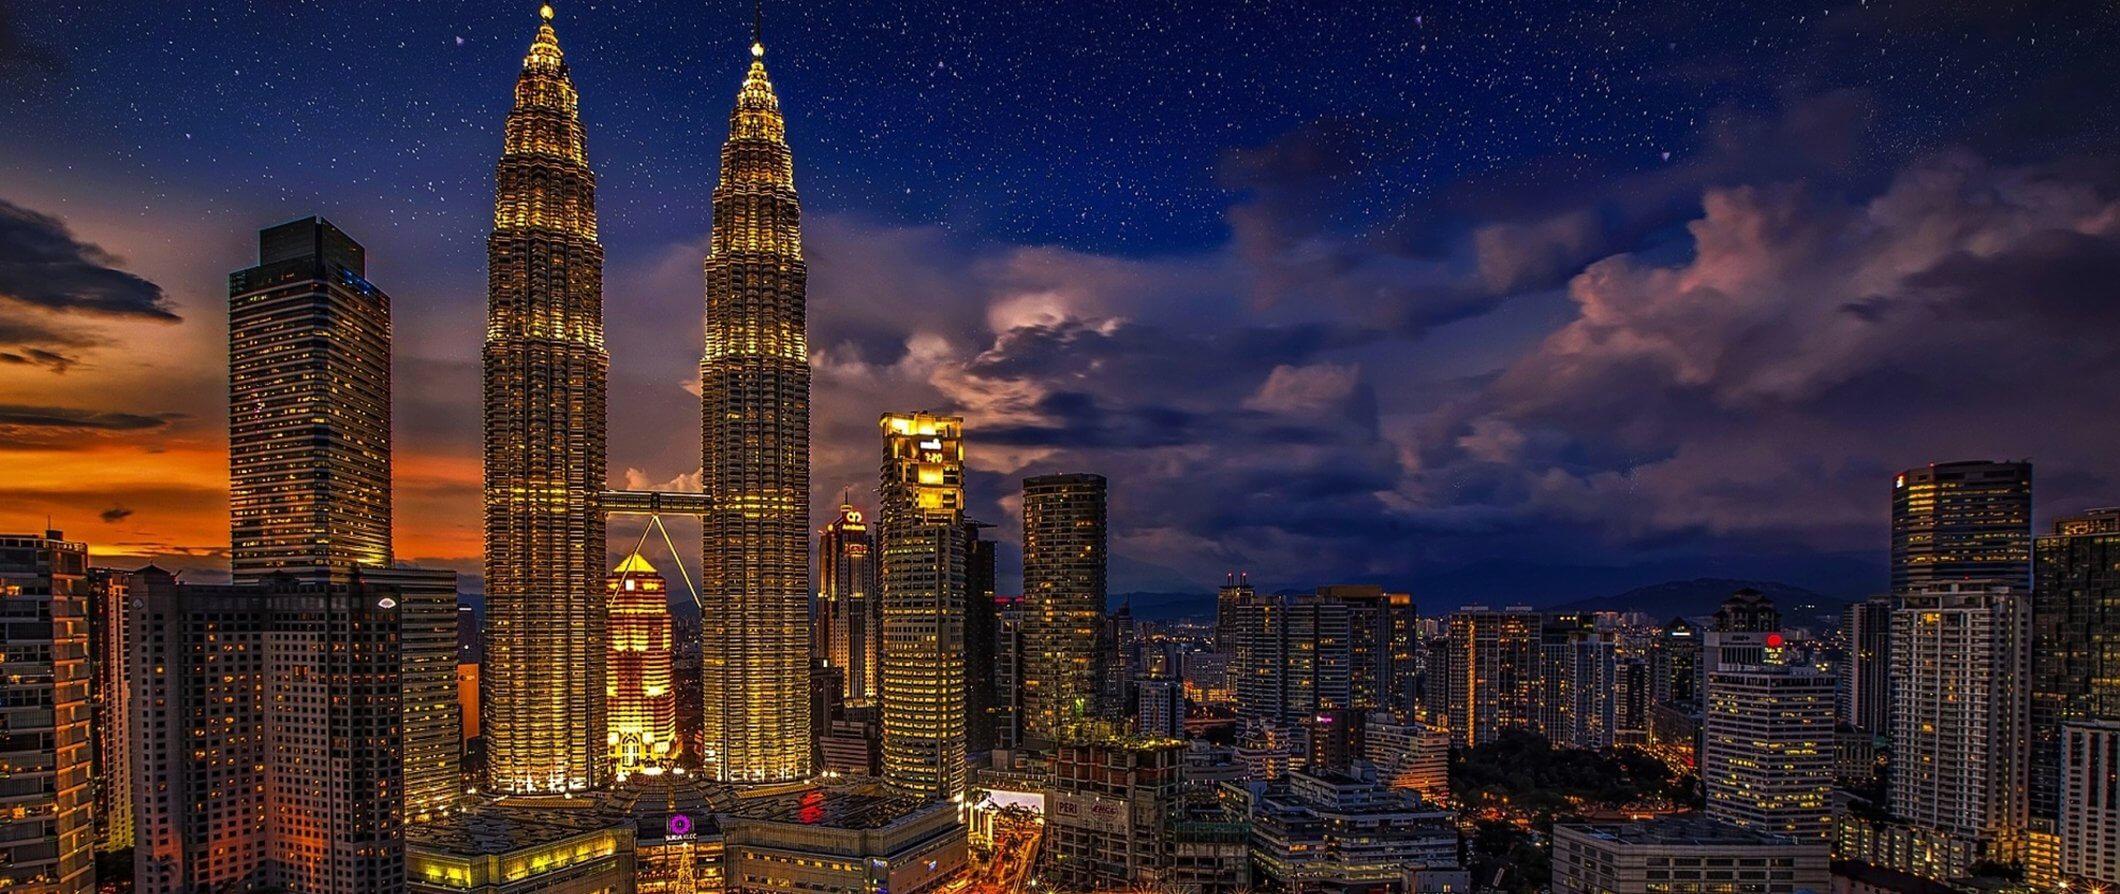 The stunning skyline of Kuala Lumpur lit up at night featuring the Petronas Towers